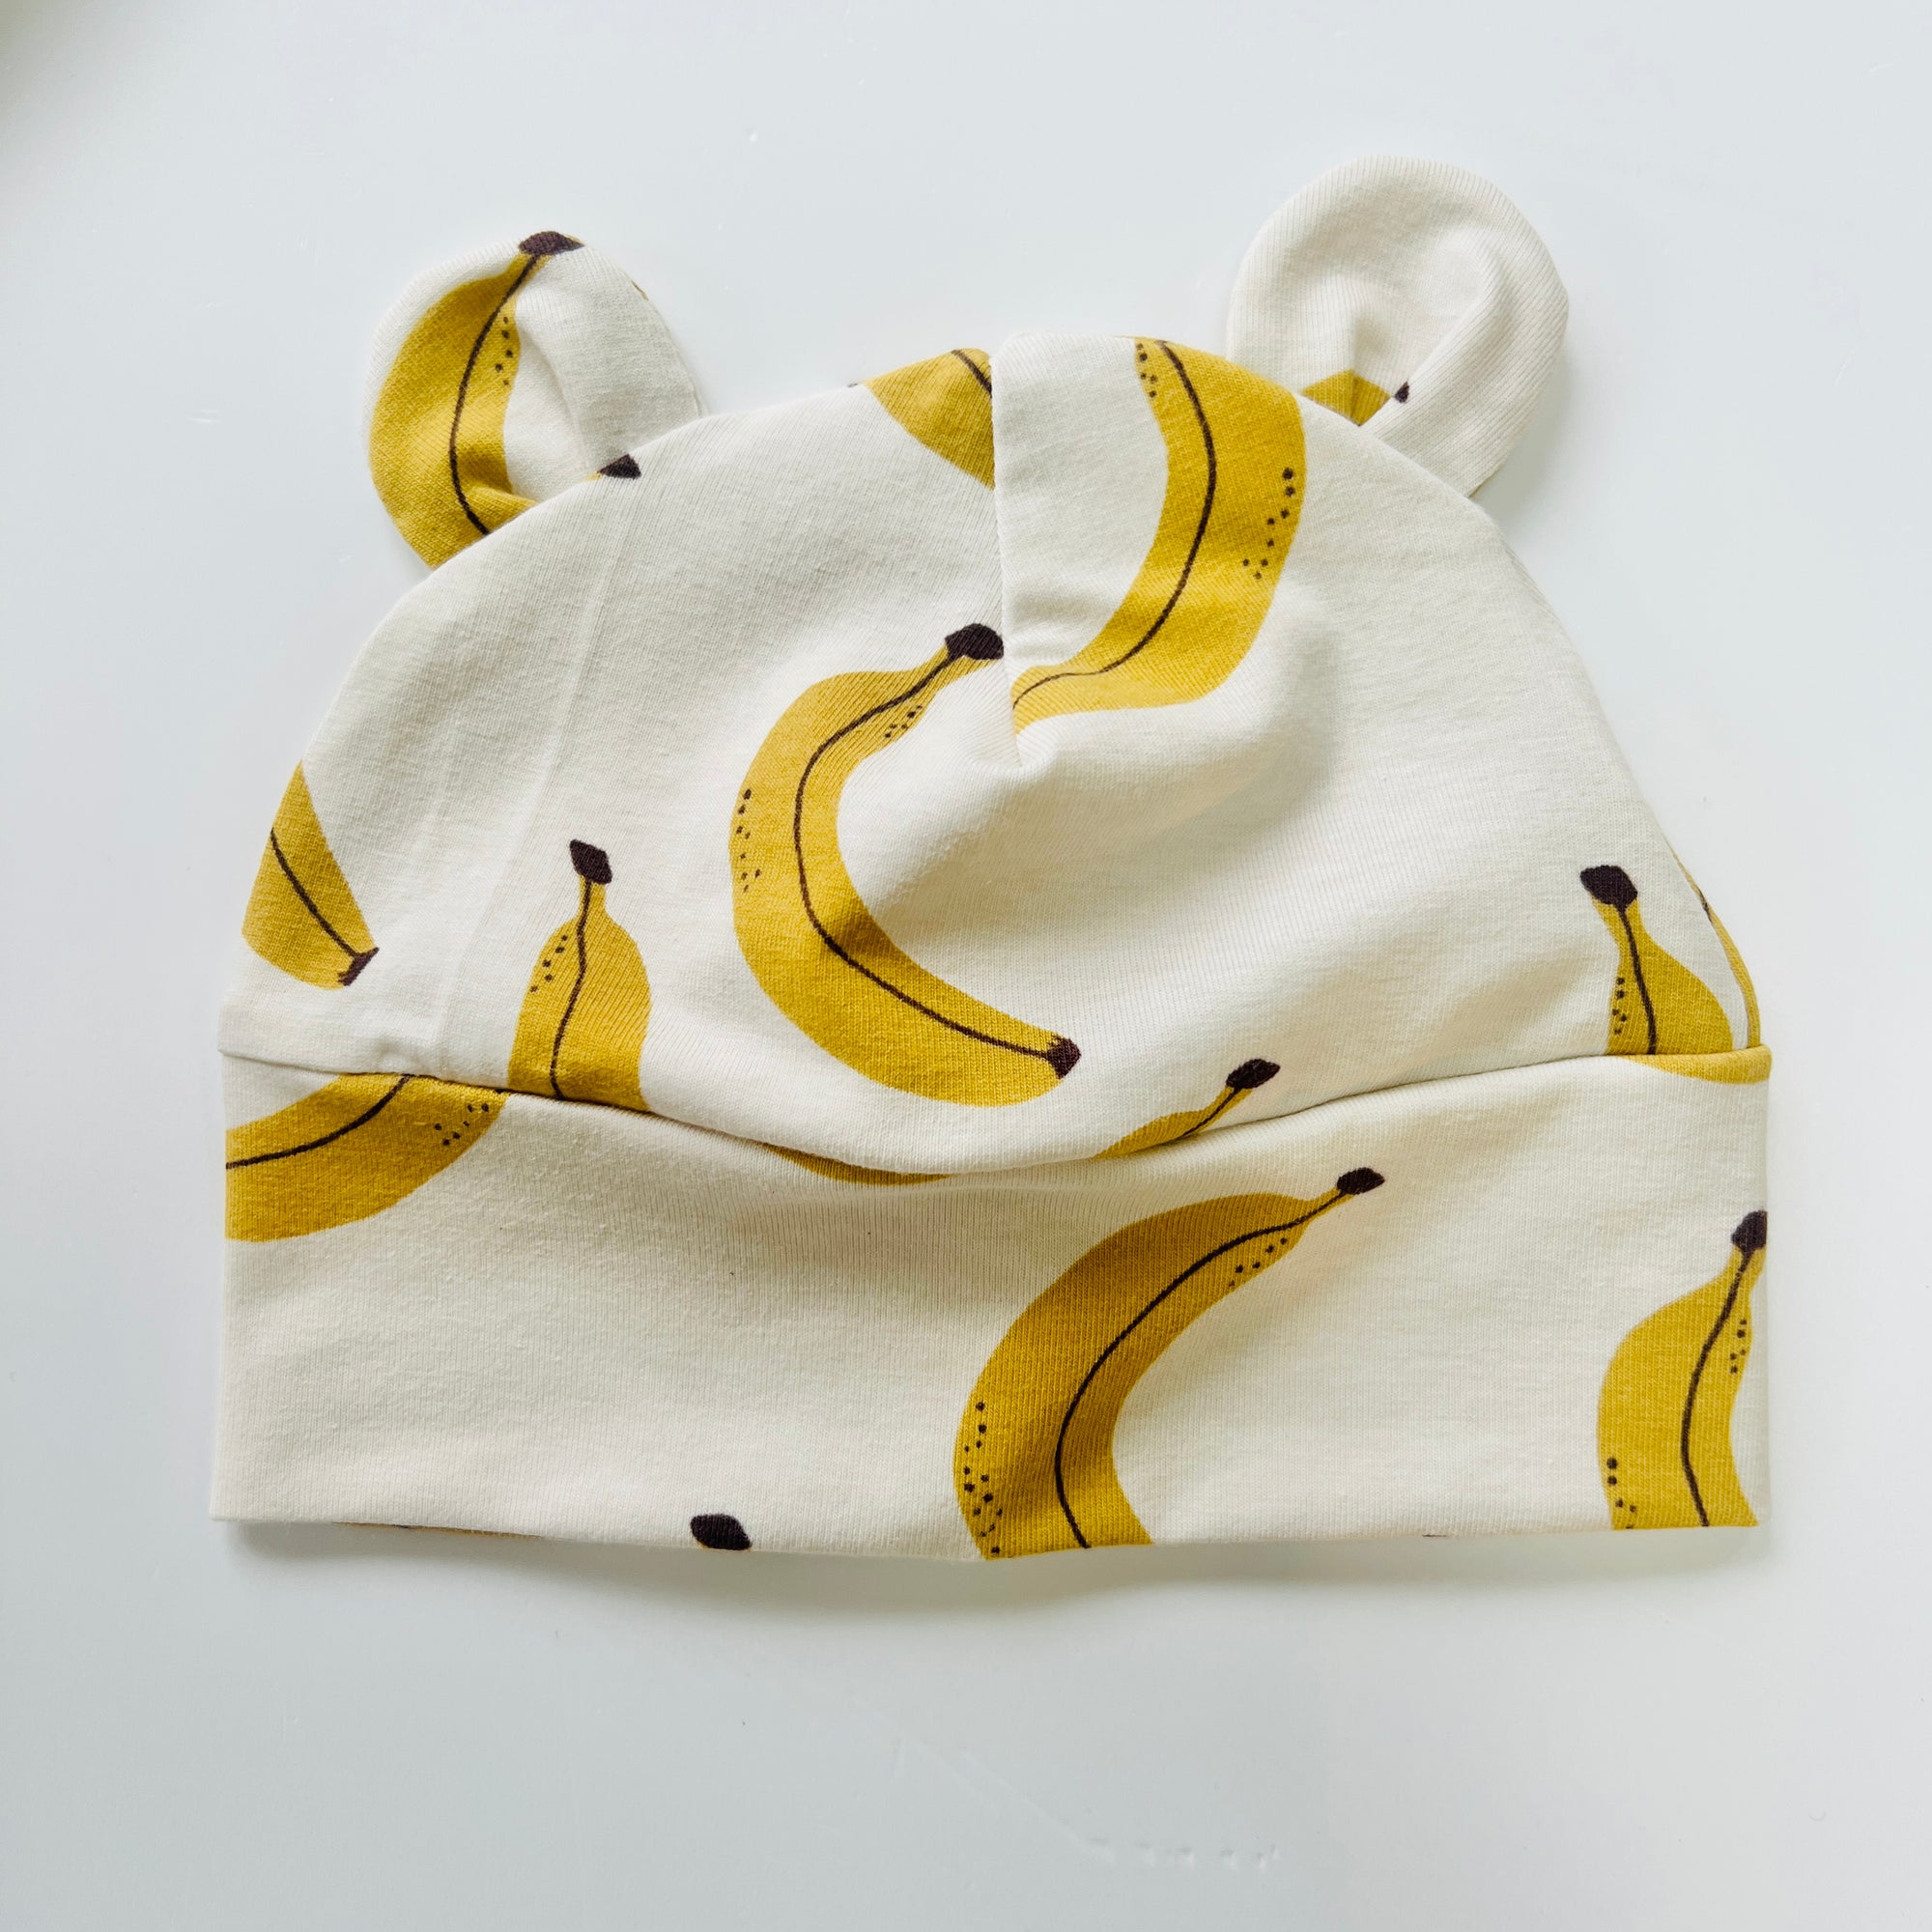 Eddie & Bee organic cotton Baby hat with ears  in Cream "Banana” print.